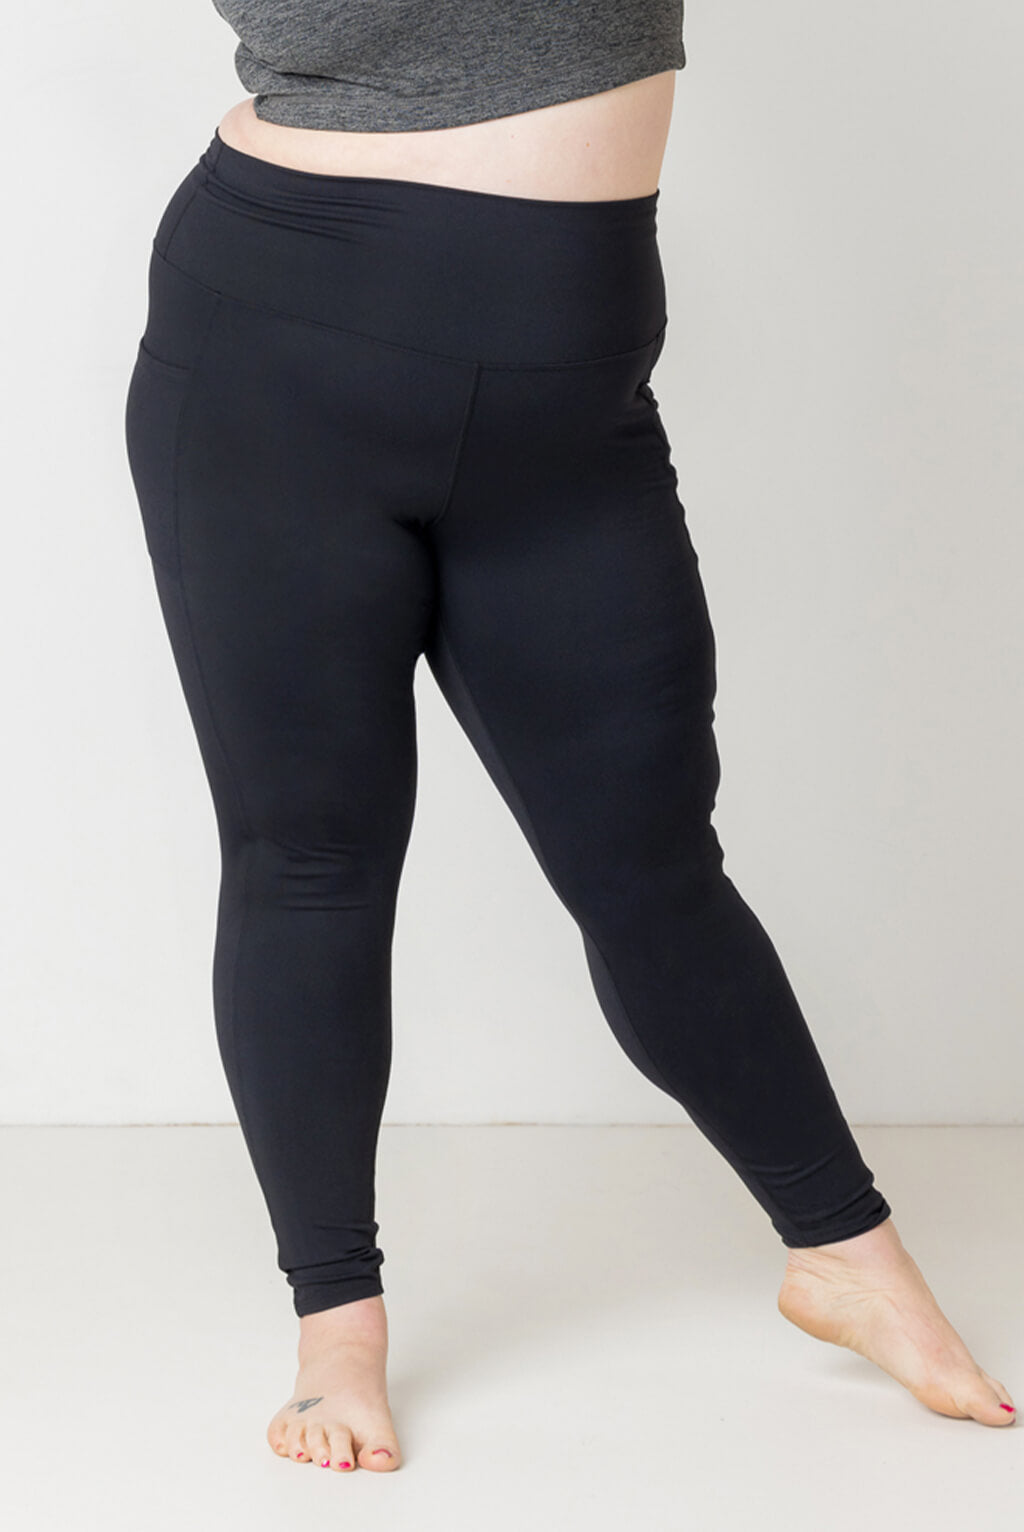 Lipedema Lymphedema support flat knit slimming leggings, long pants K1  compression (15-18 mmHg)